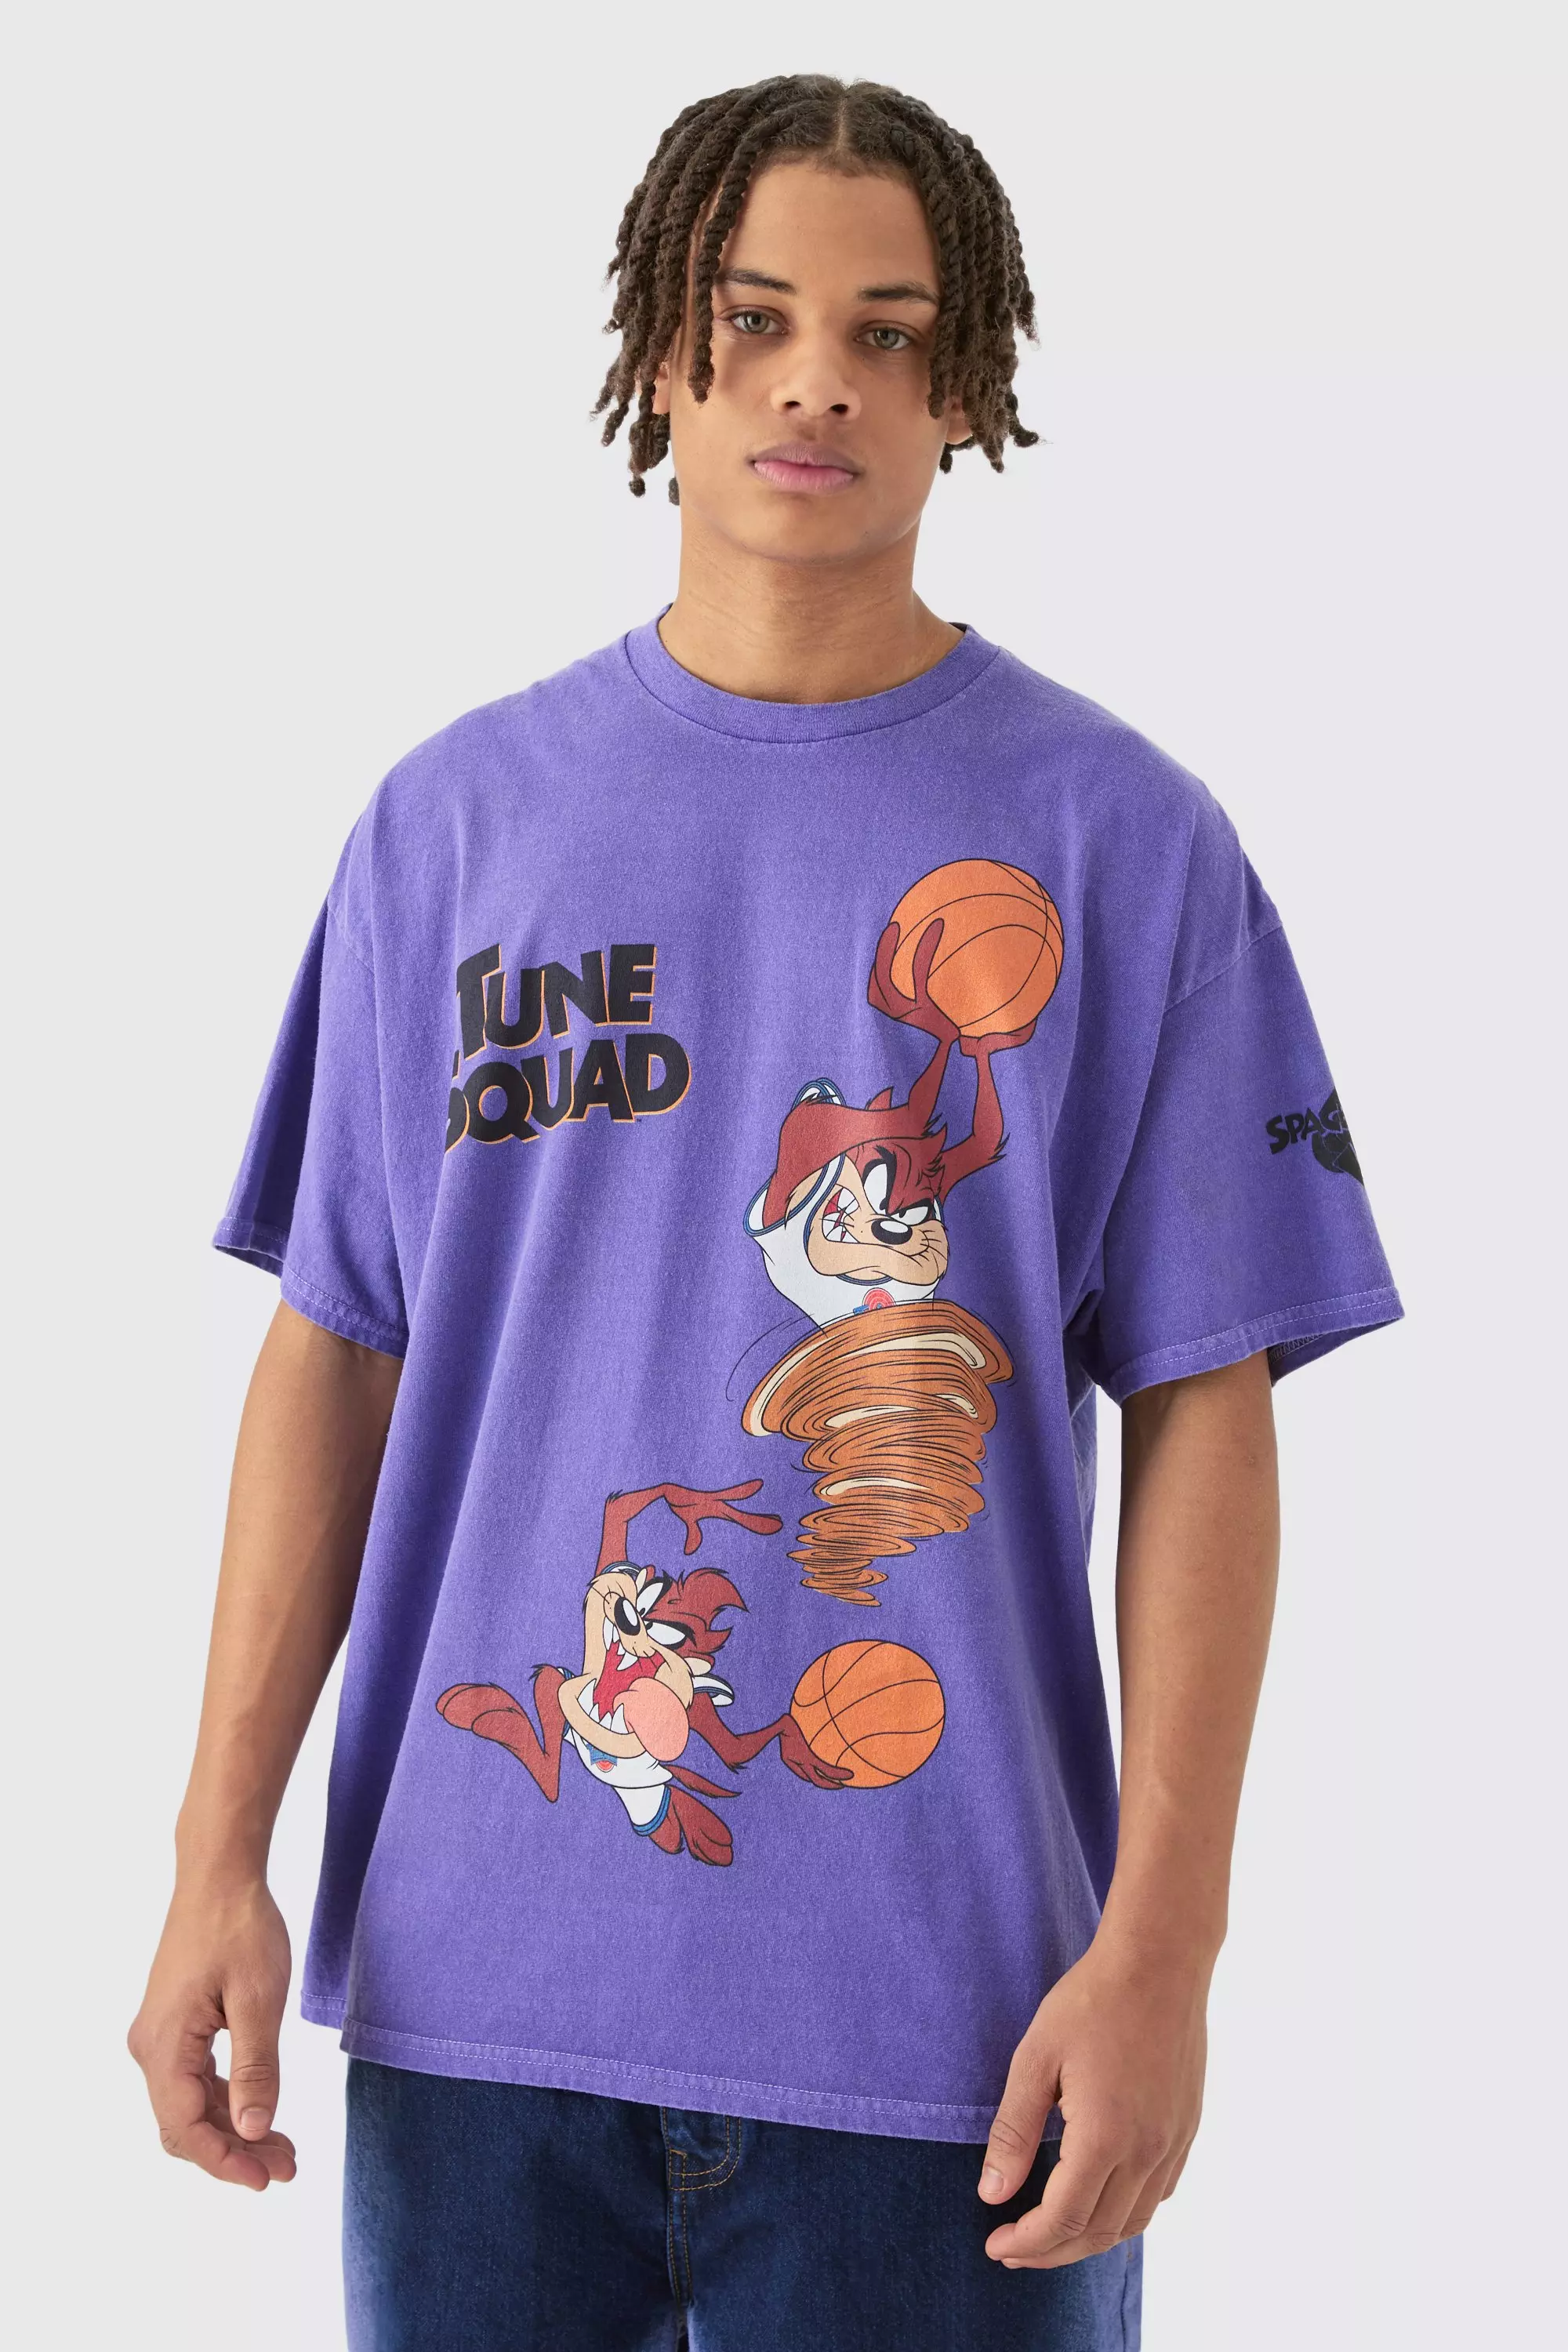 Oversized Looney Tunes Taz License T-shirt Purple